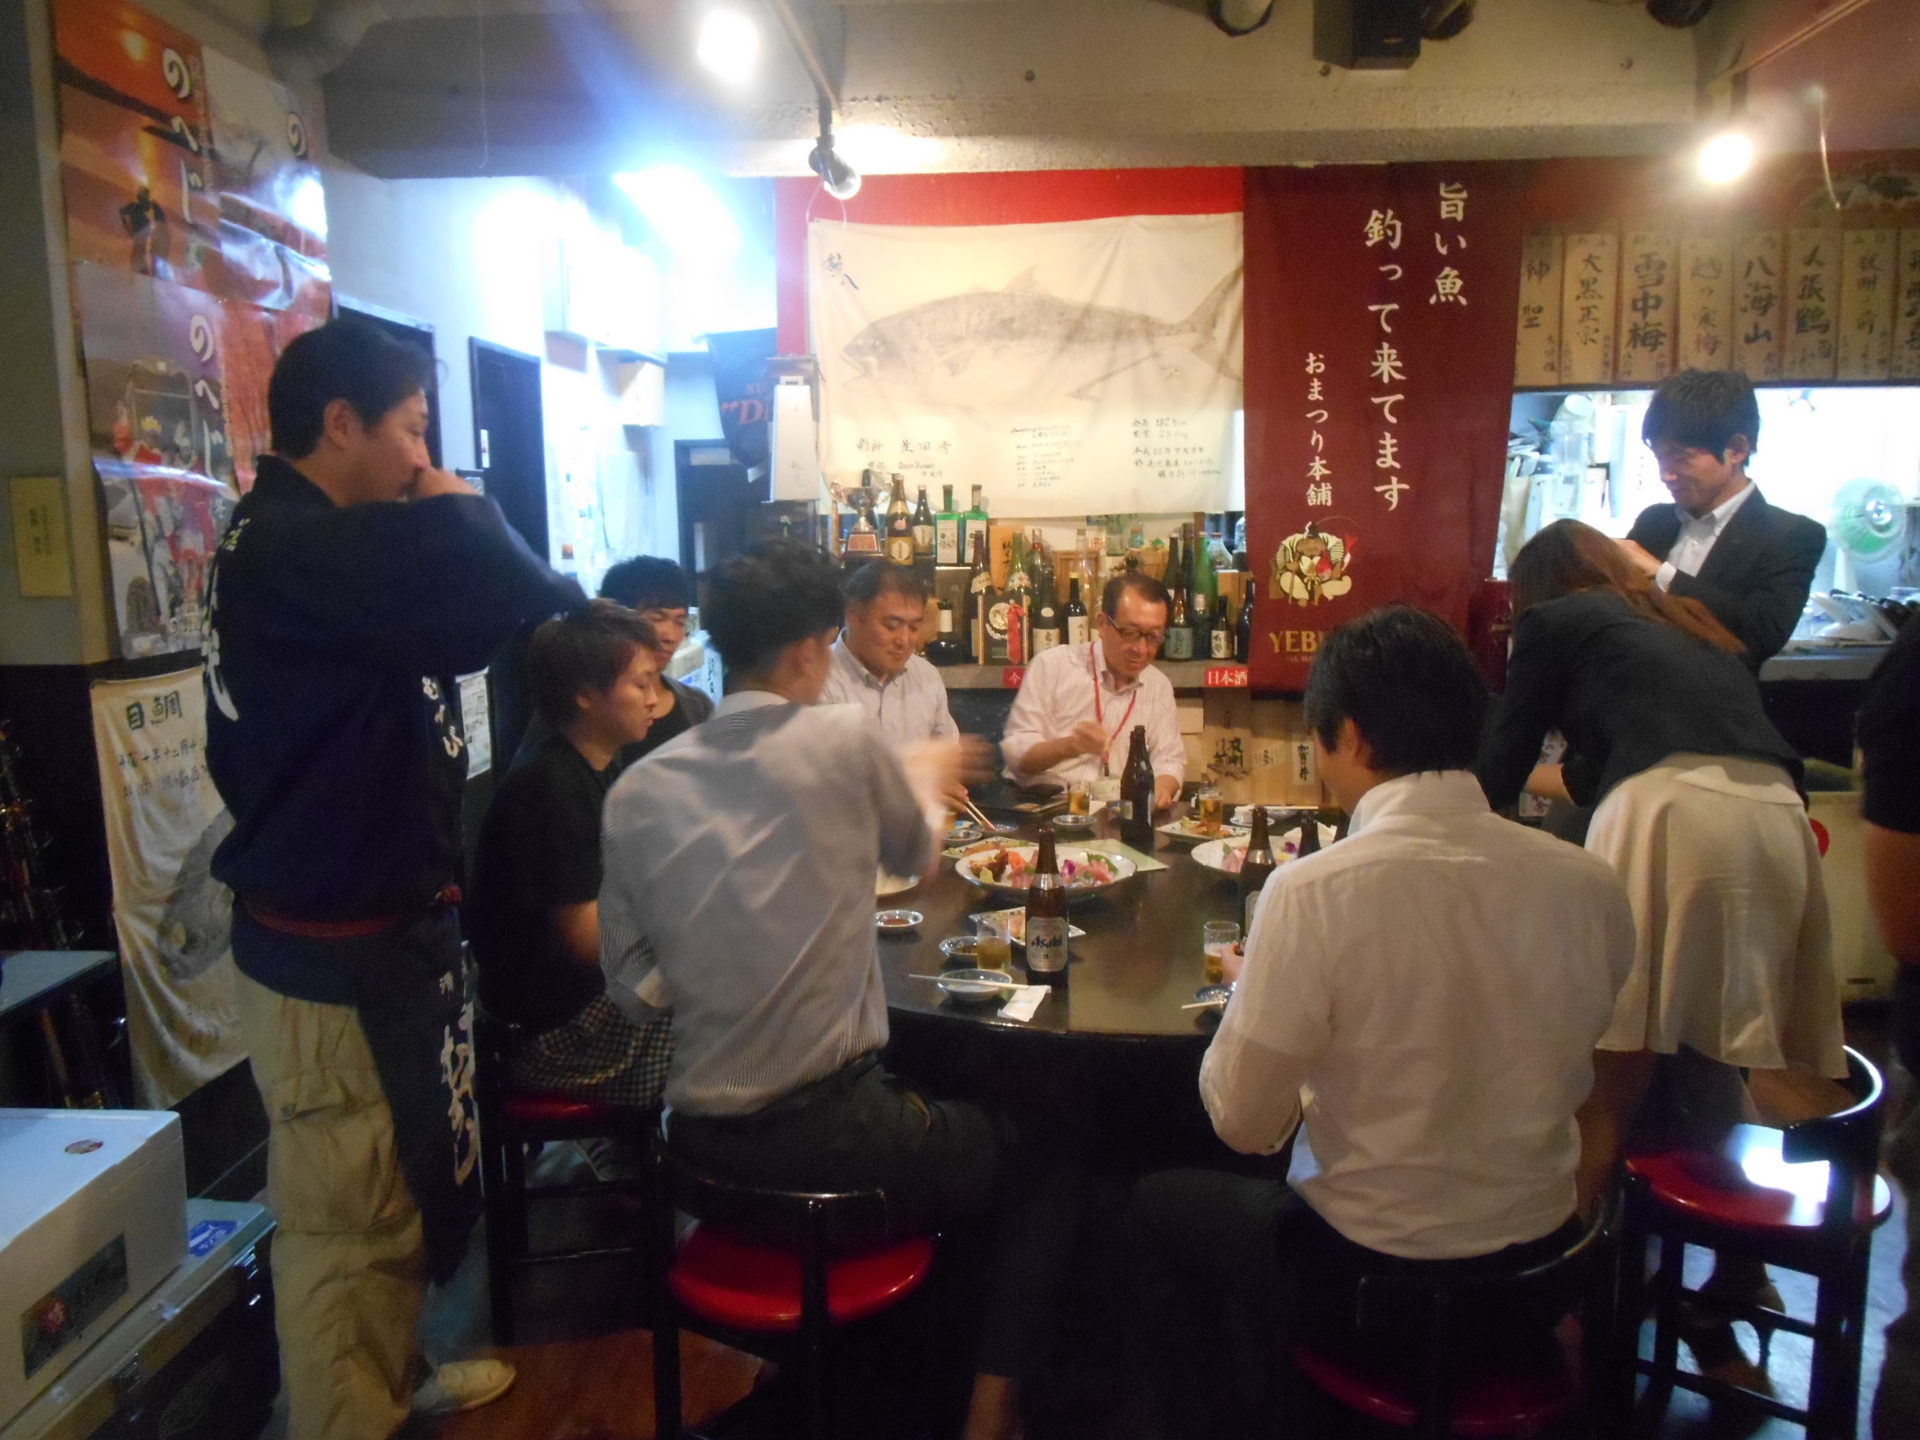 DSCN5599 1920x1440 - 2015年9月14日 AOsuki定例飲み会開催しました。